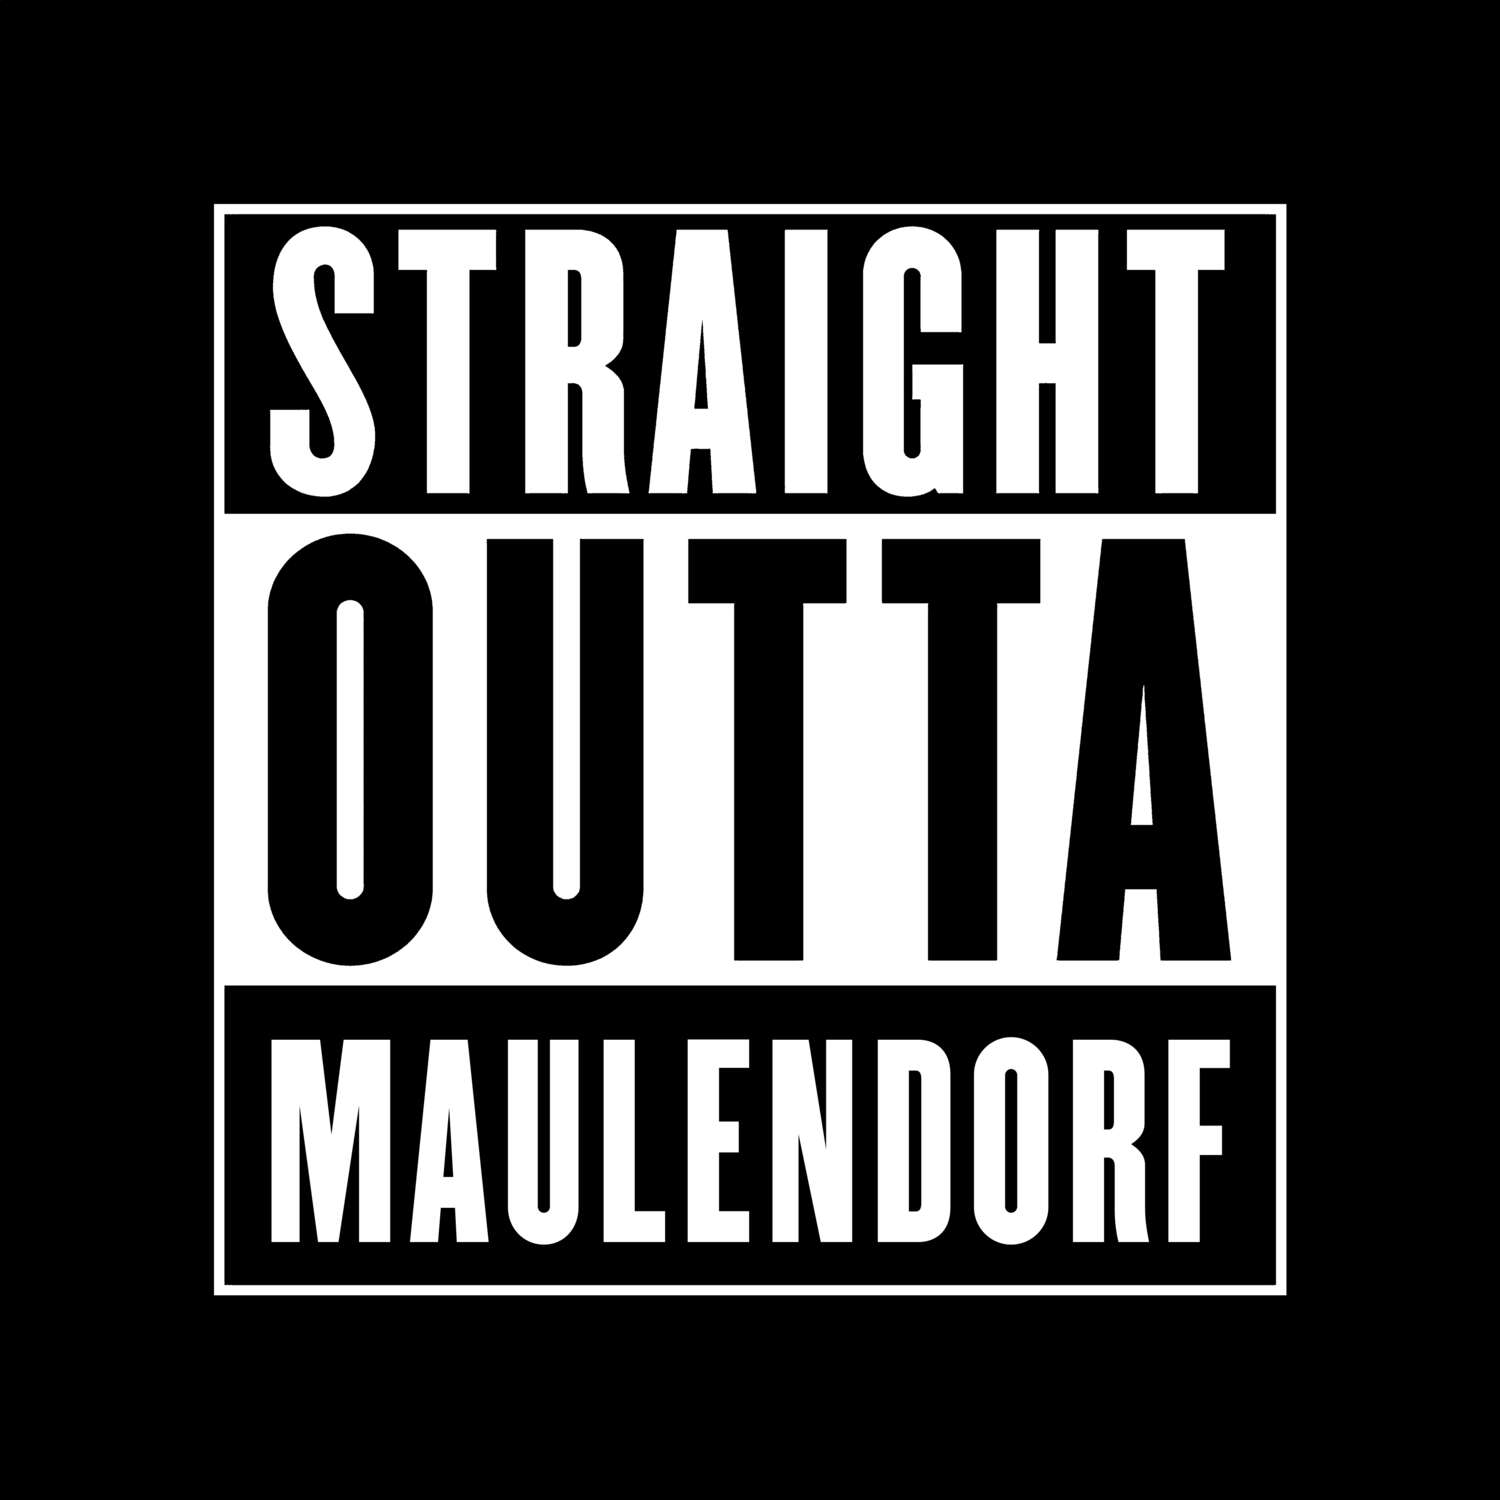 Maulendorf T-Shirt »Straight Outta«